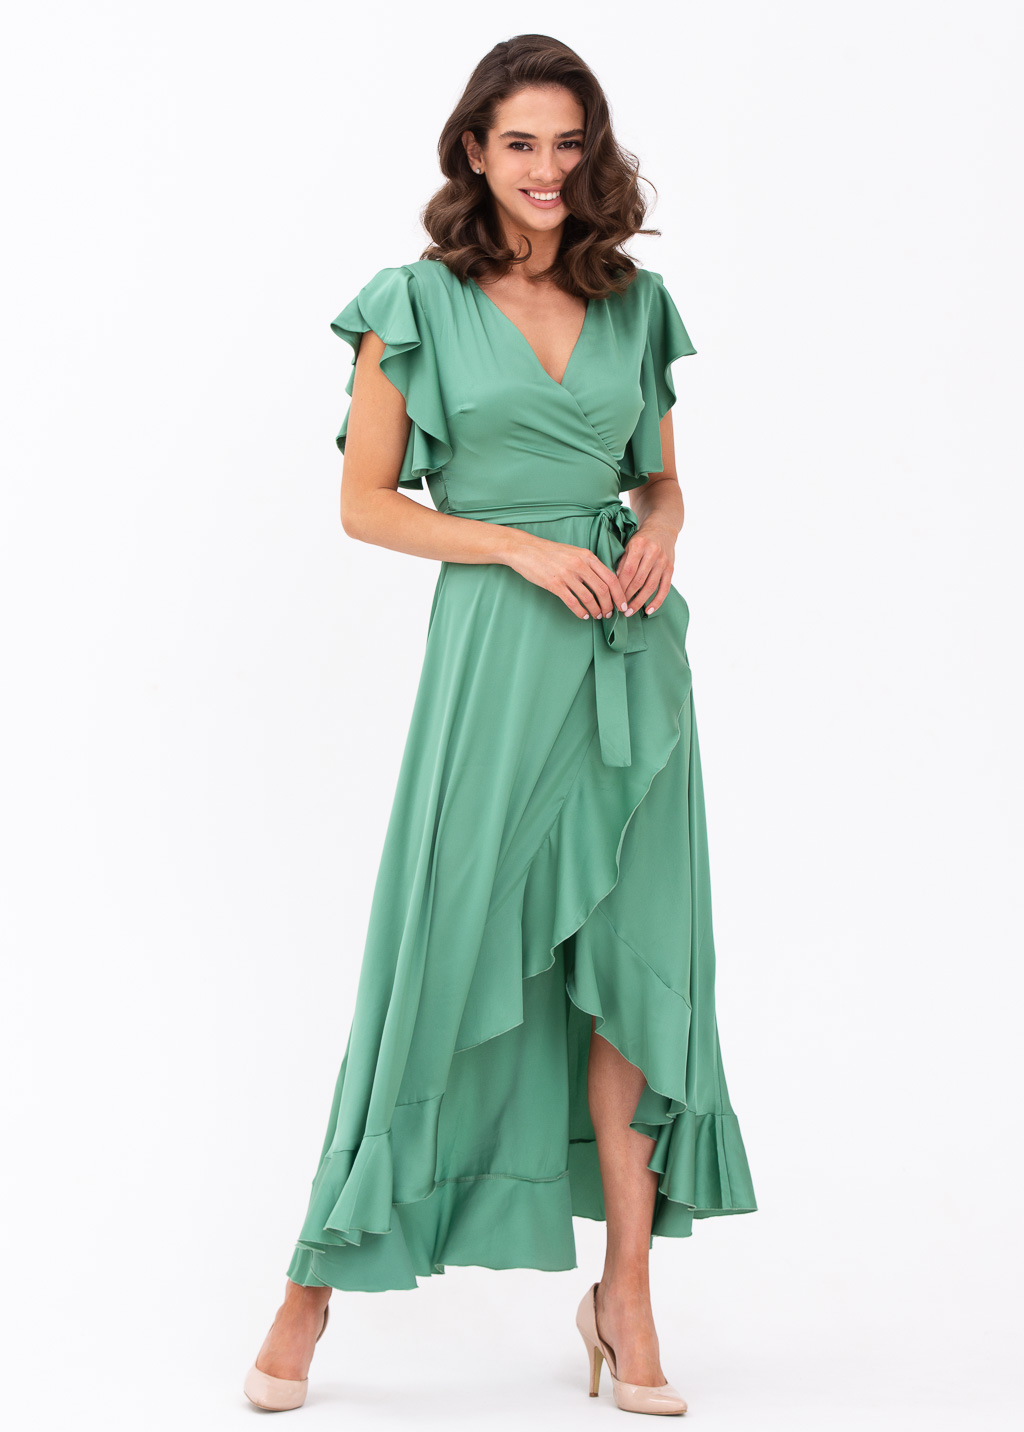 Olive green wrap dress